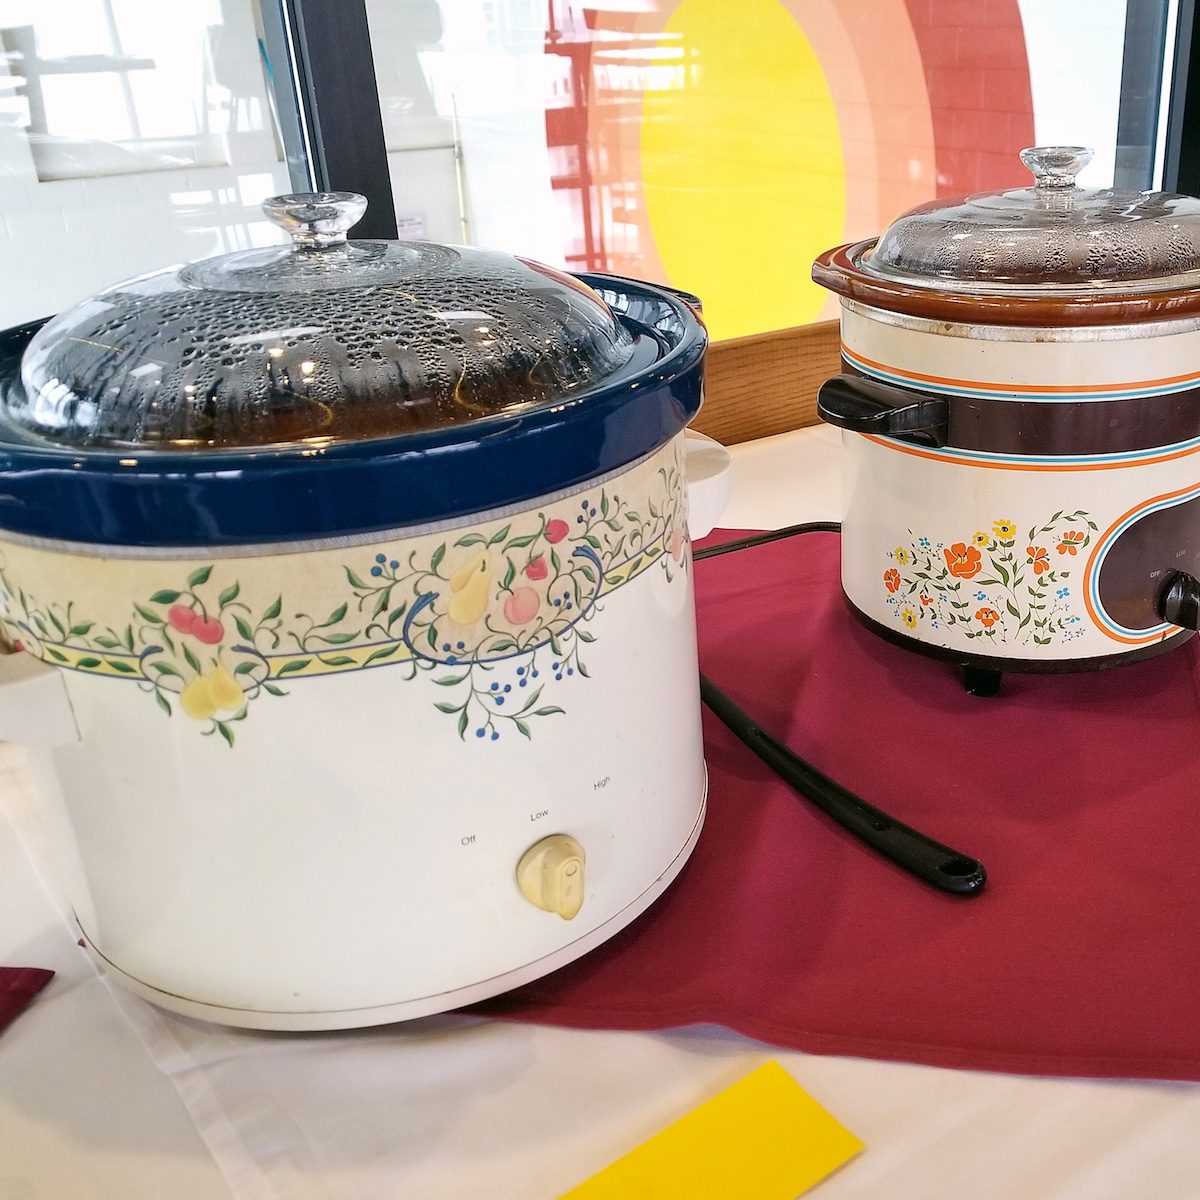 Monogrammed Insulated Crock Pot Slow Cooker Dutch Oven 